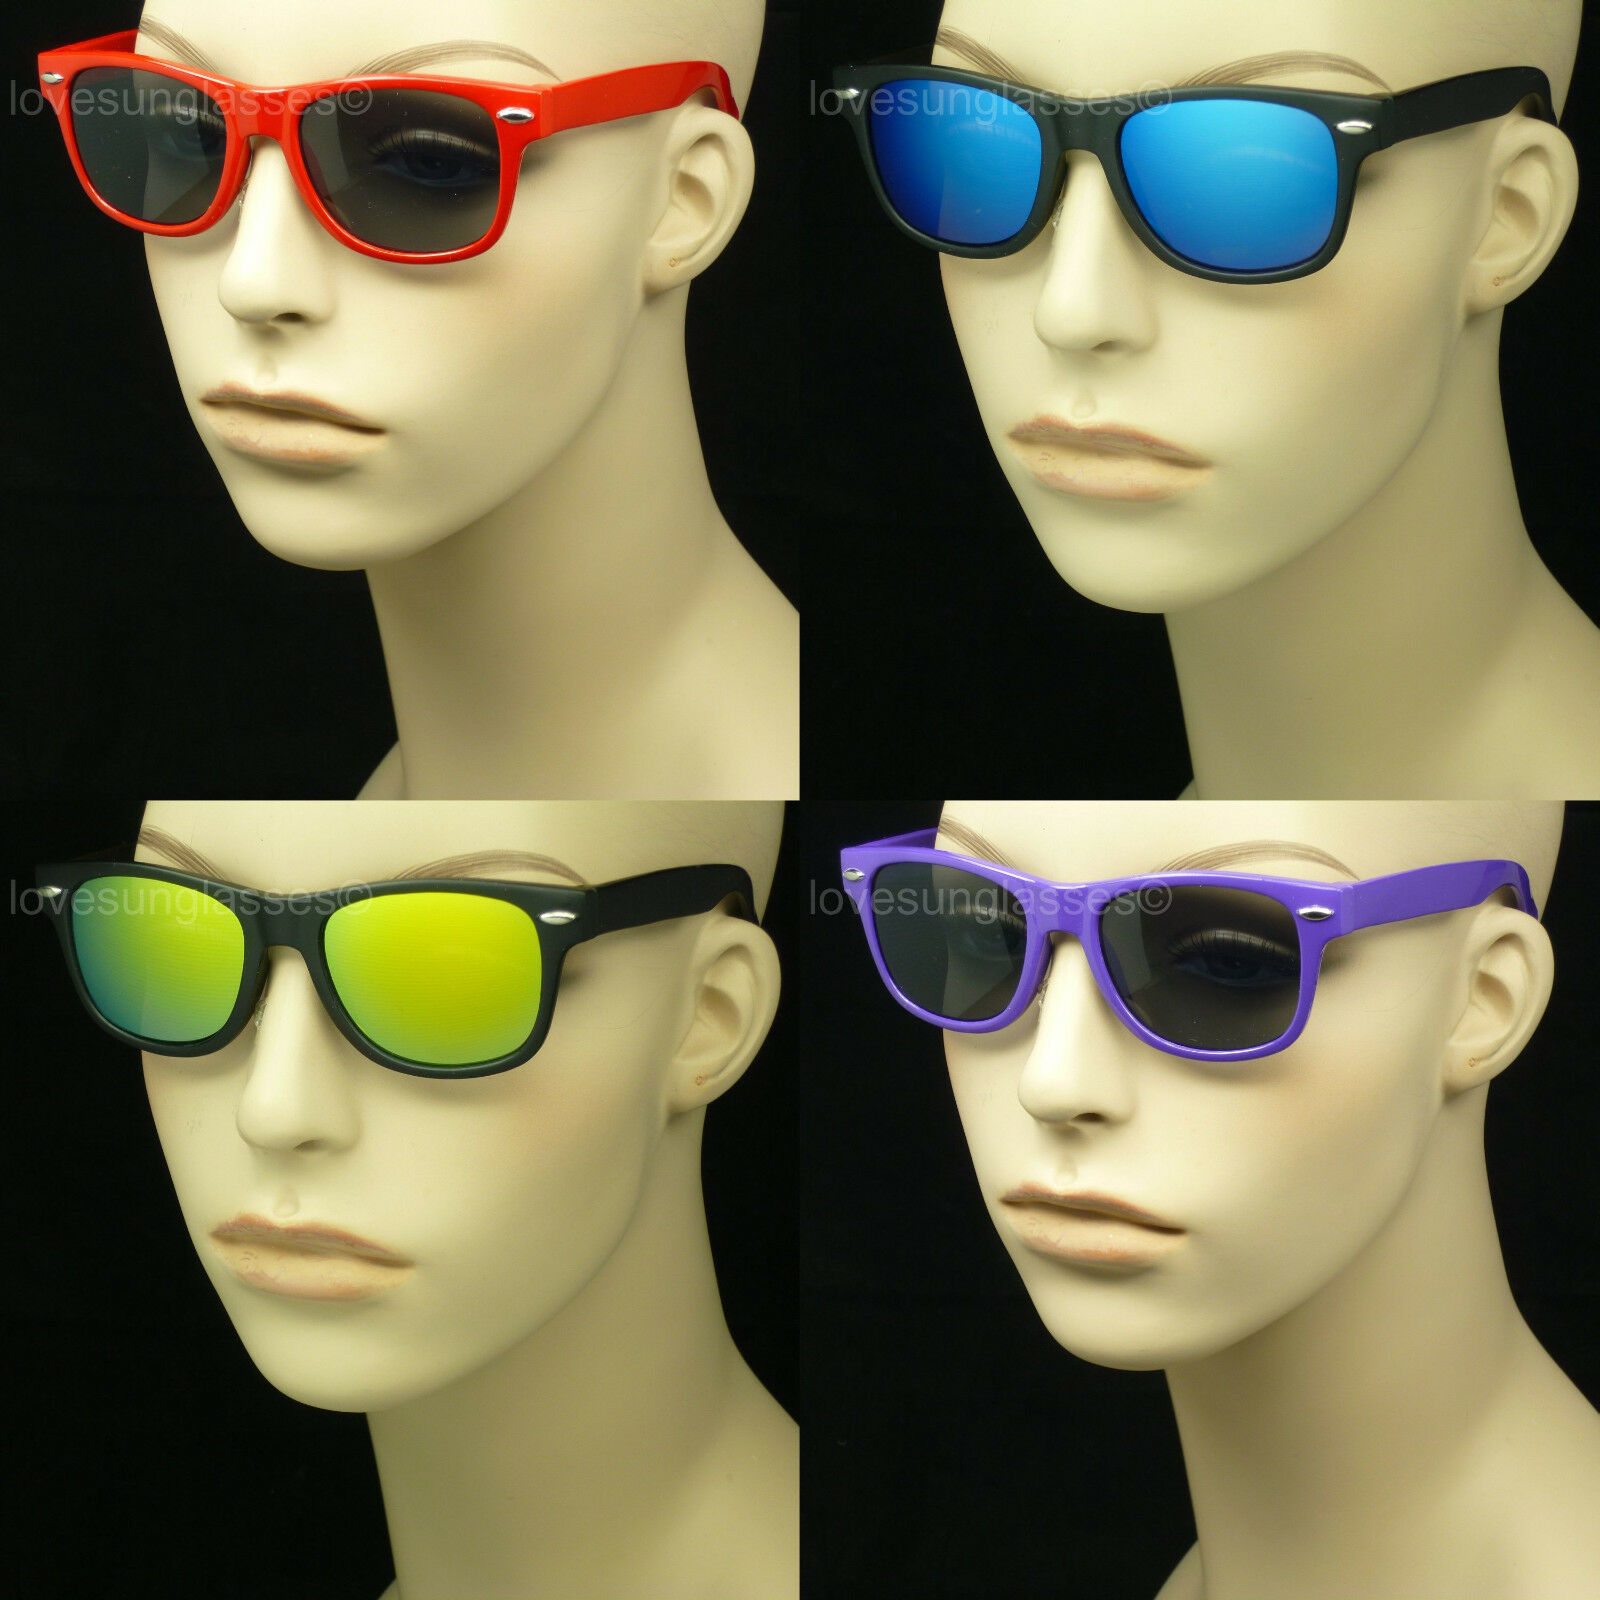 Sunglasses Kids Small Children Face Frame New 100% Uv Protection Retro